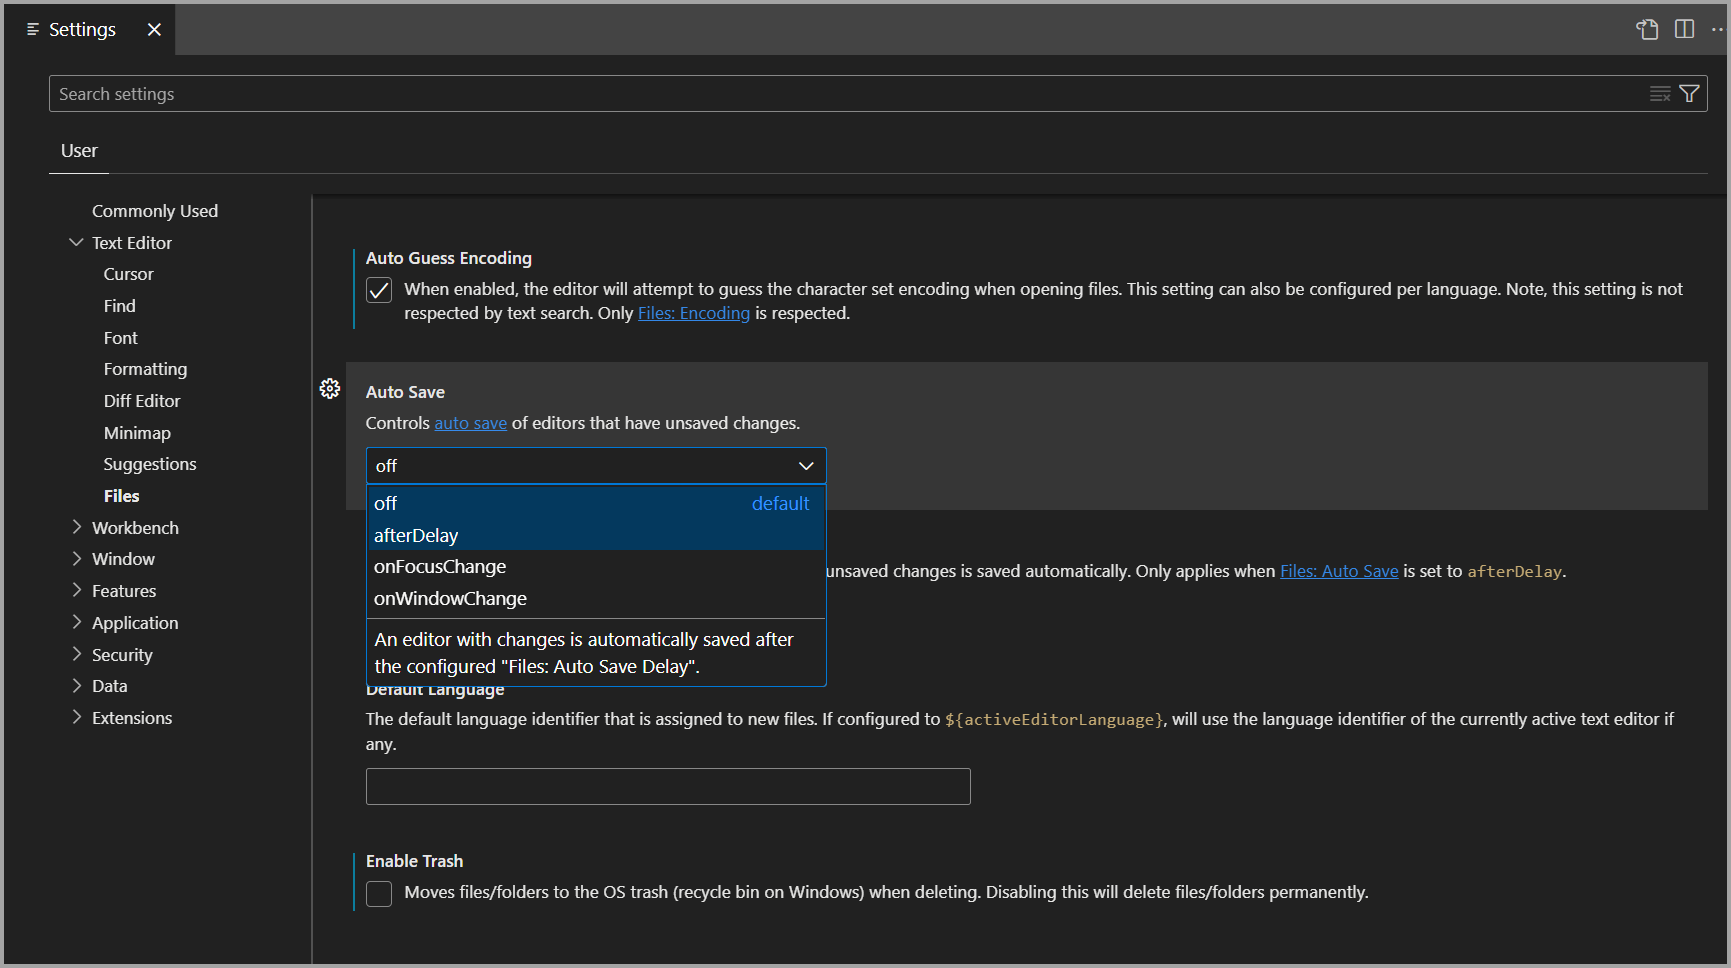 Screenshot of changed settings in the Settings editor in Azure Data Studio.